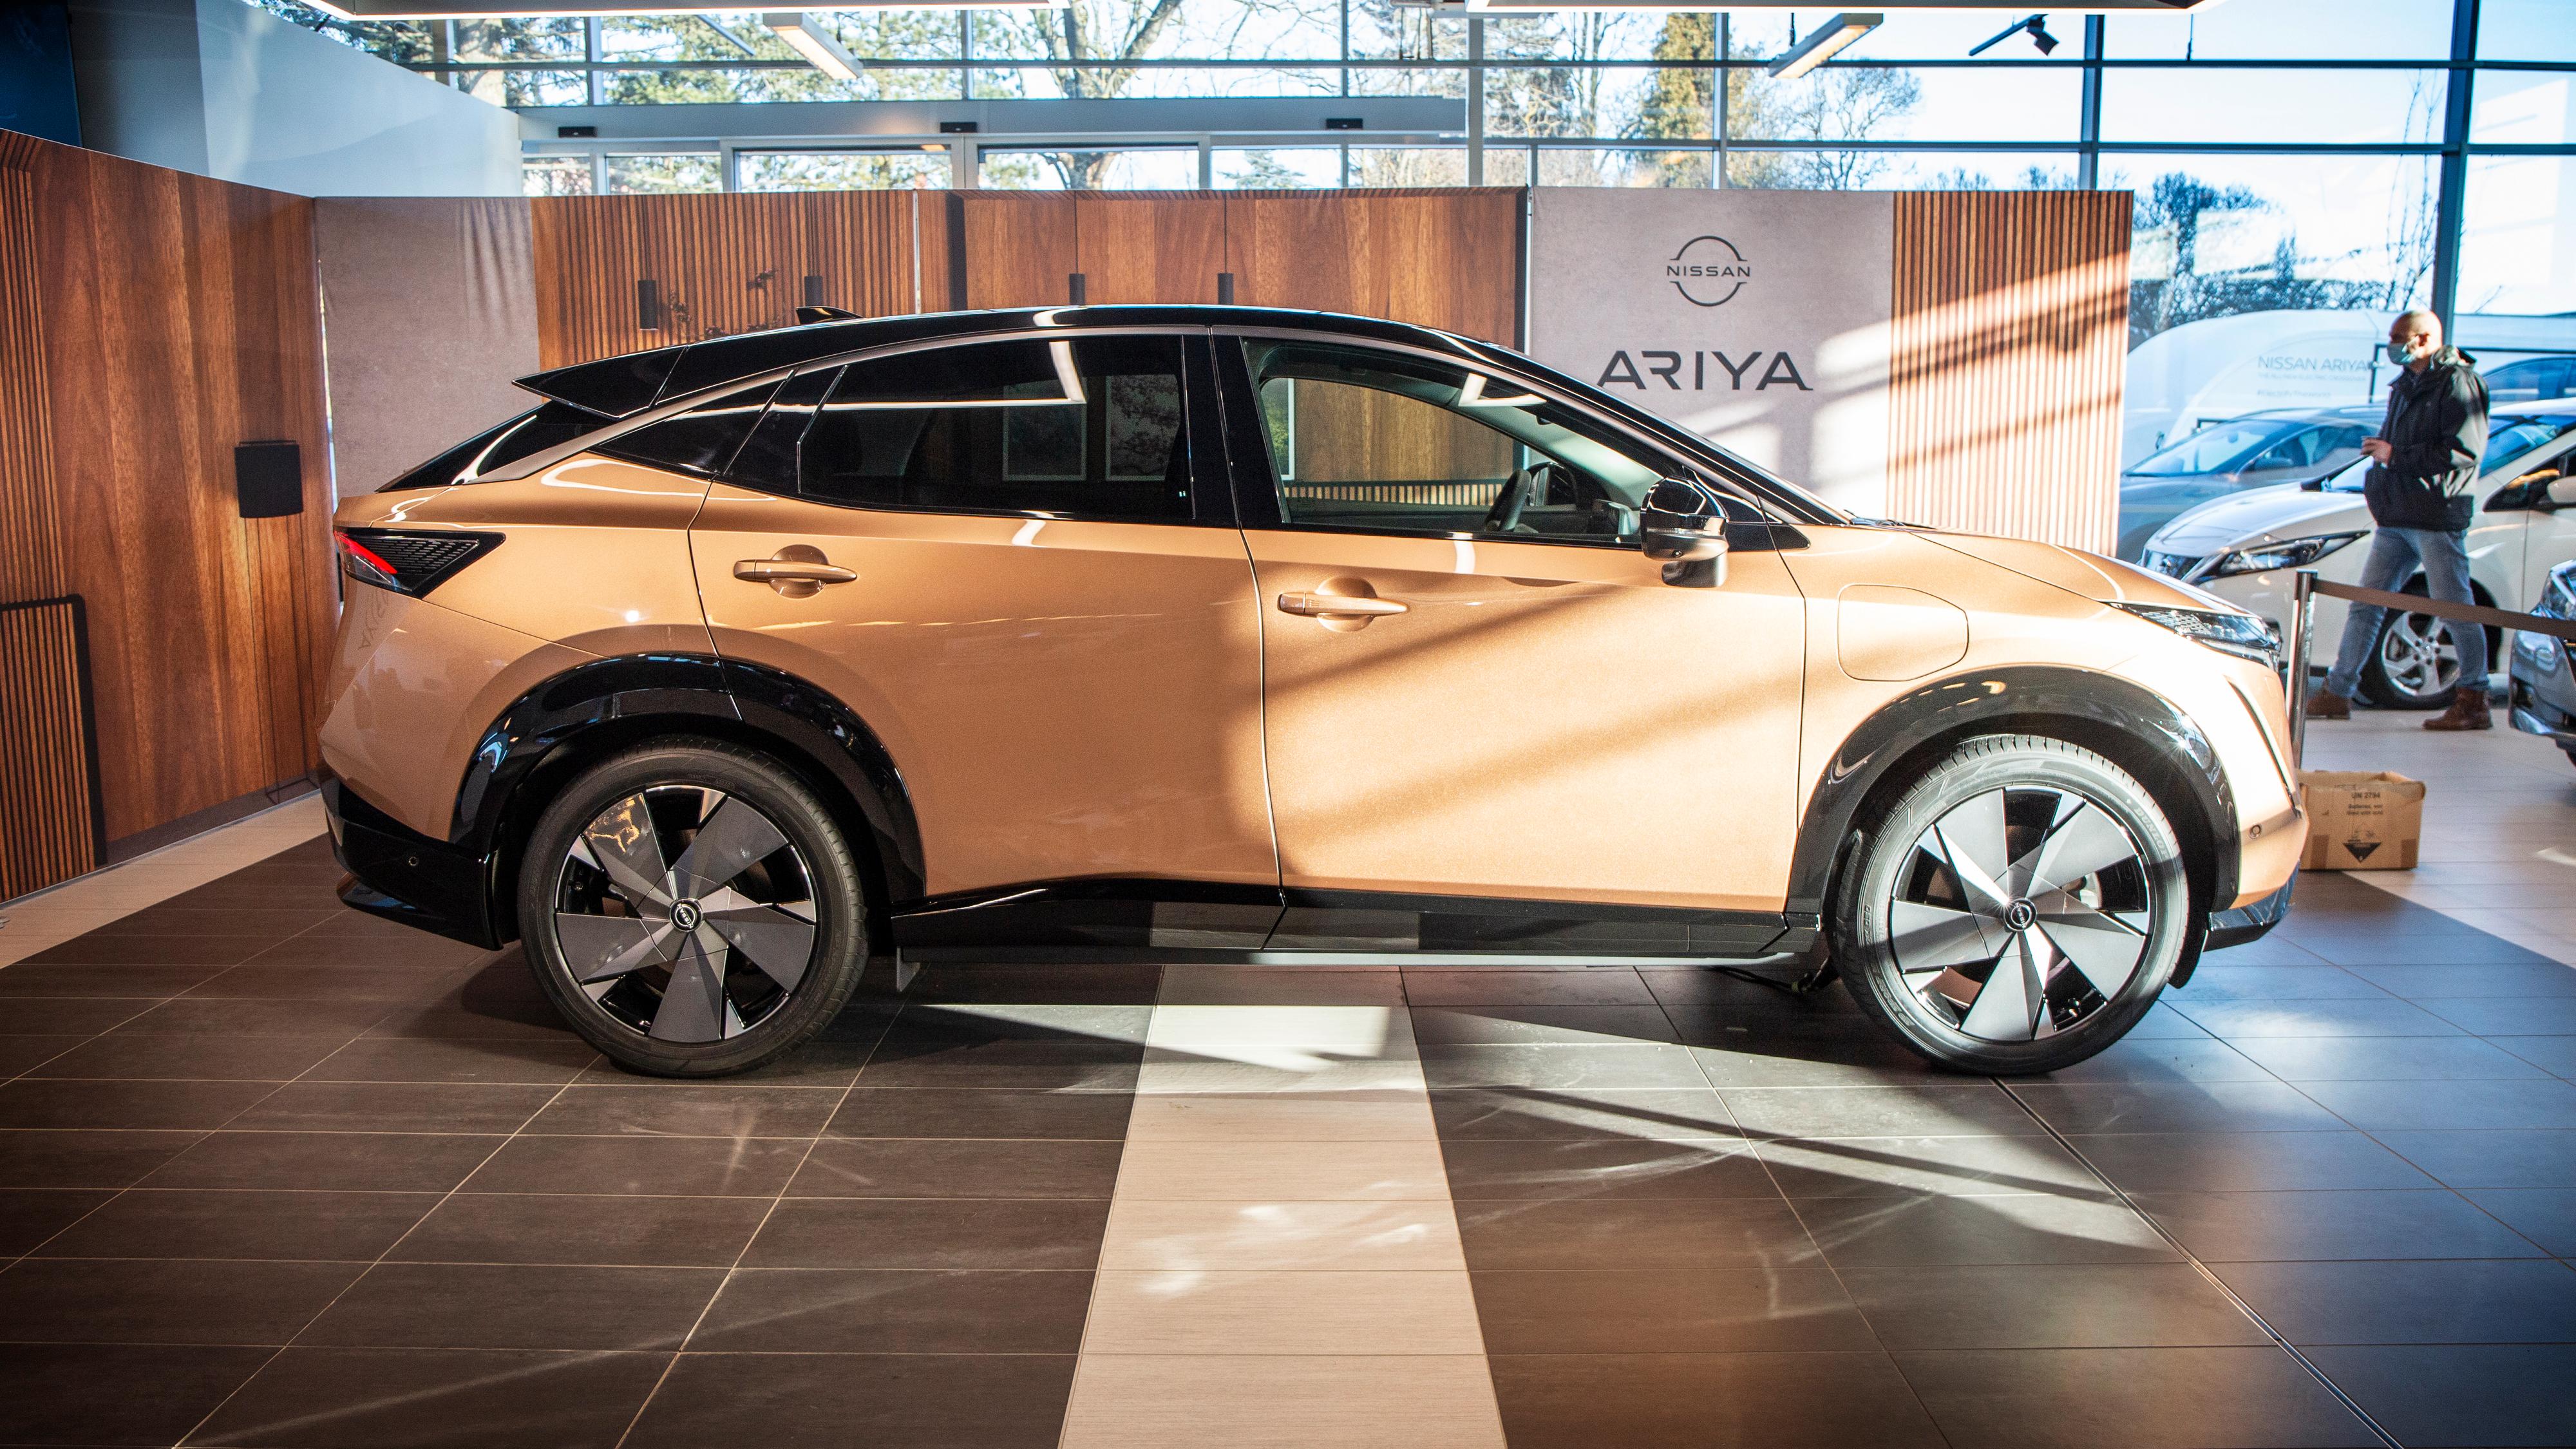 Nissan Ariya – her på norgesbesøk allerede i februar 2021. 